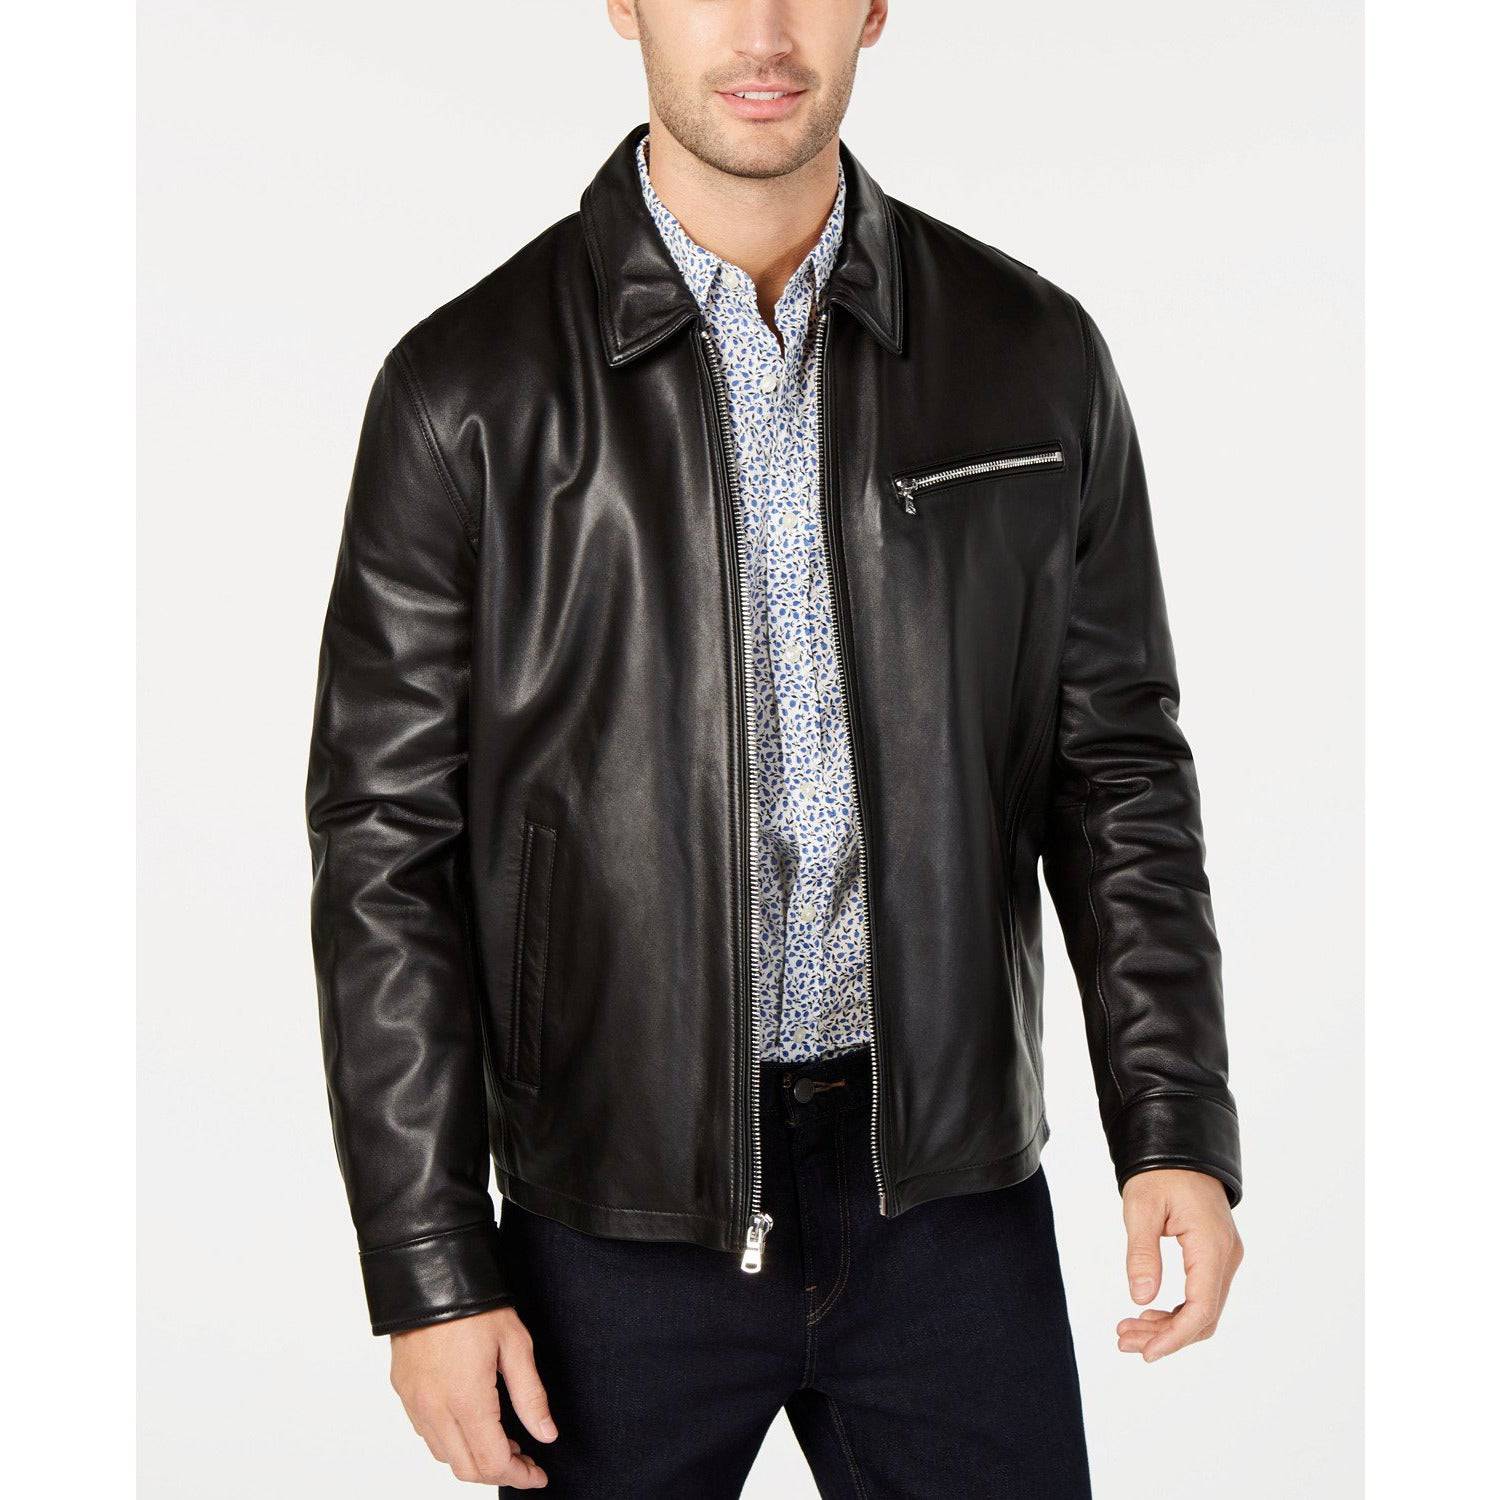 Shop Now! Michael Kors Men's Leather Jacket - Zooloo Leather